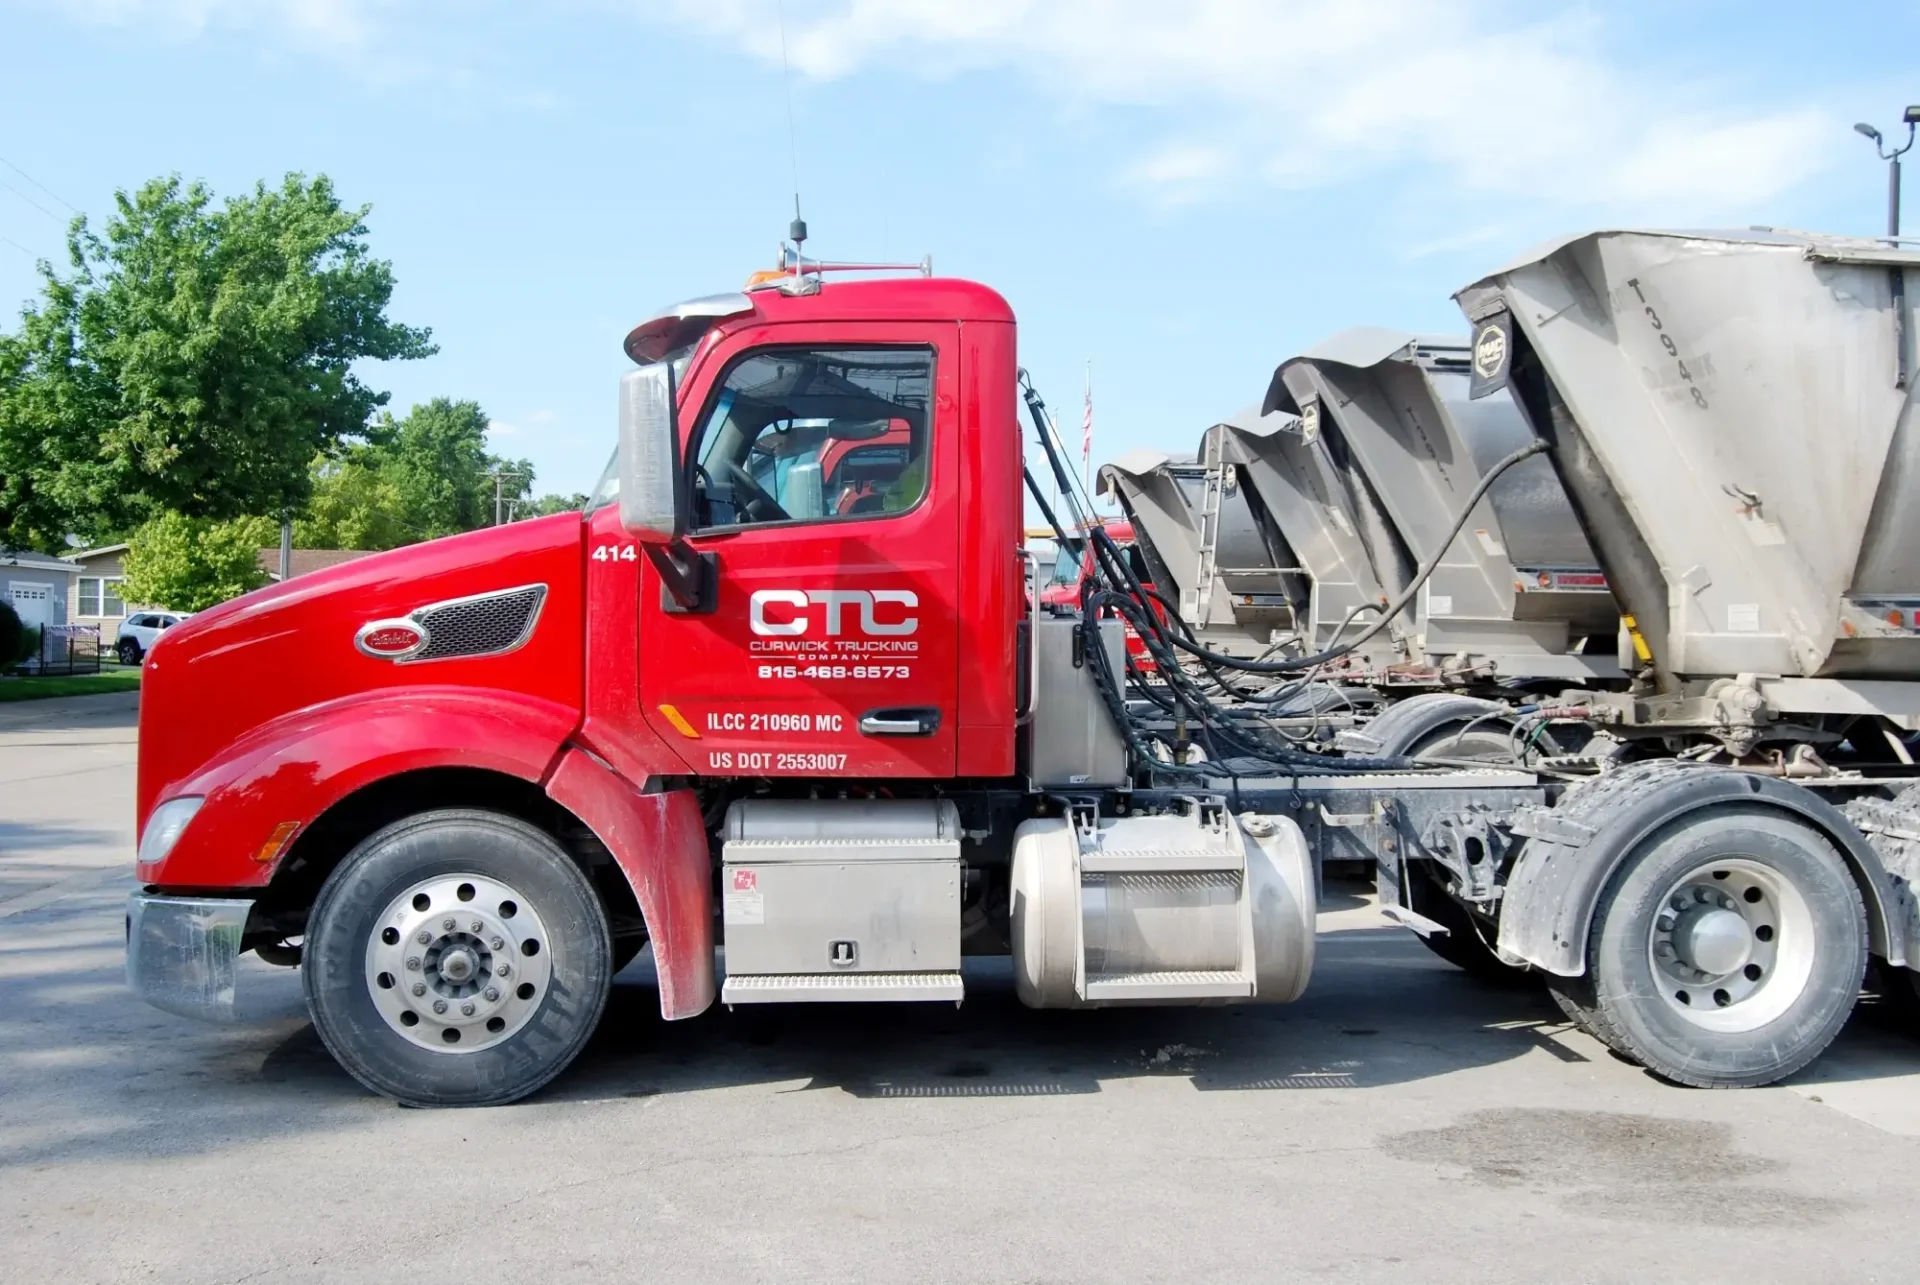 Curwick Trucking Company, LLC